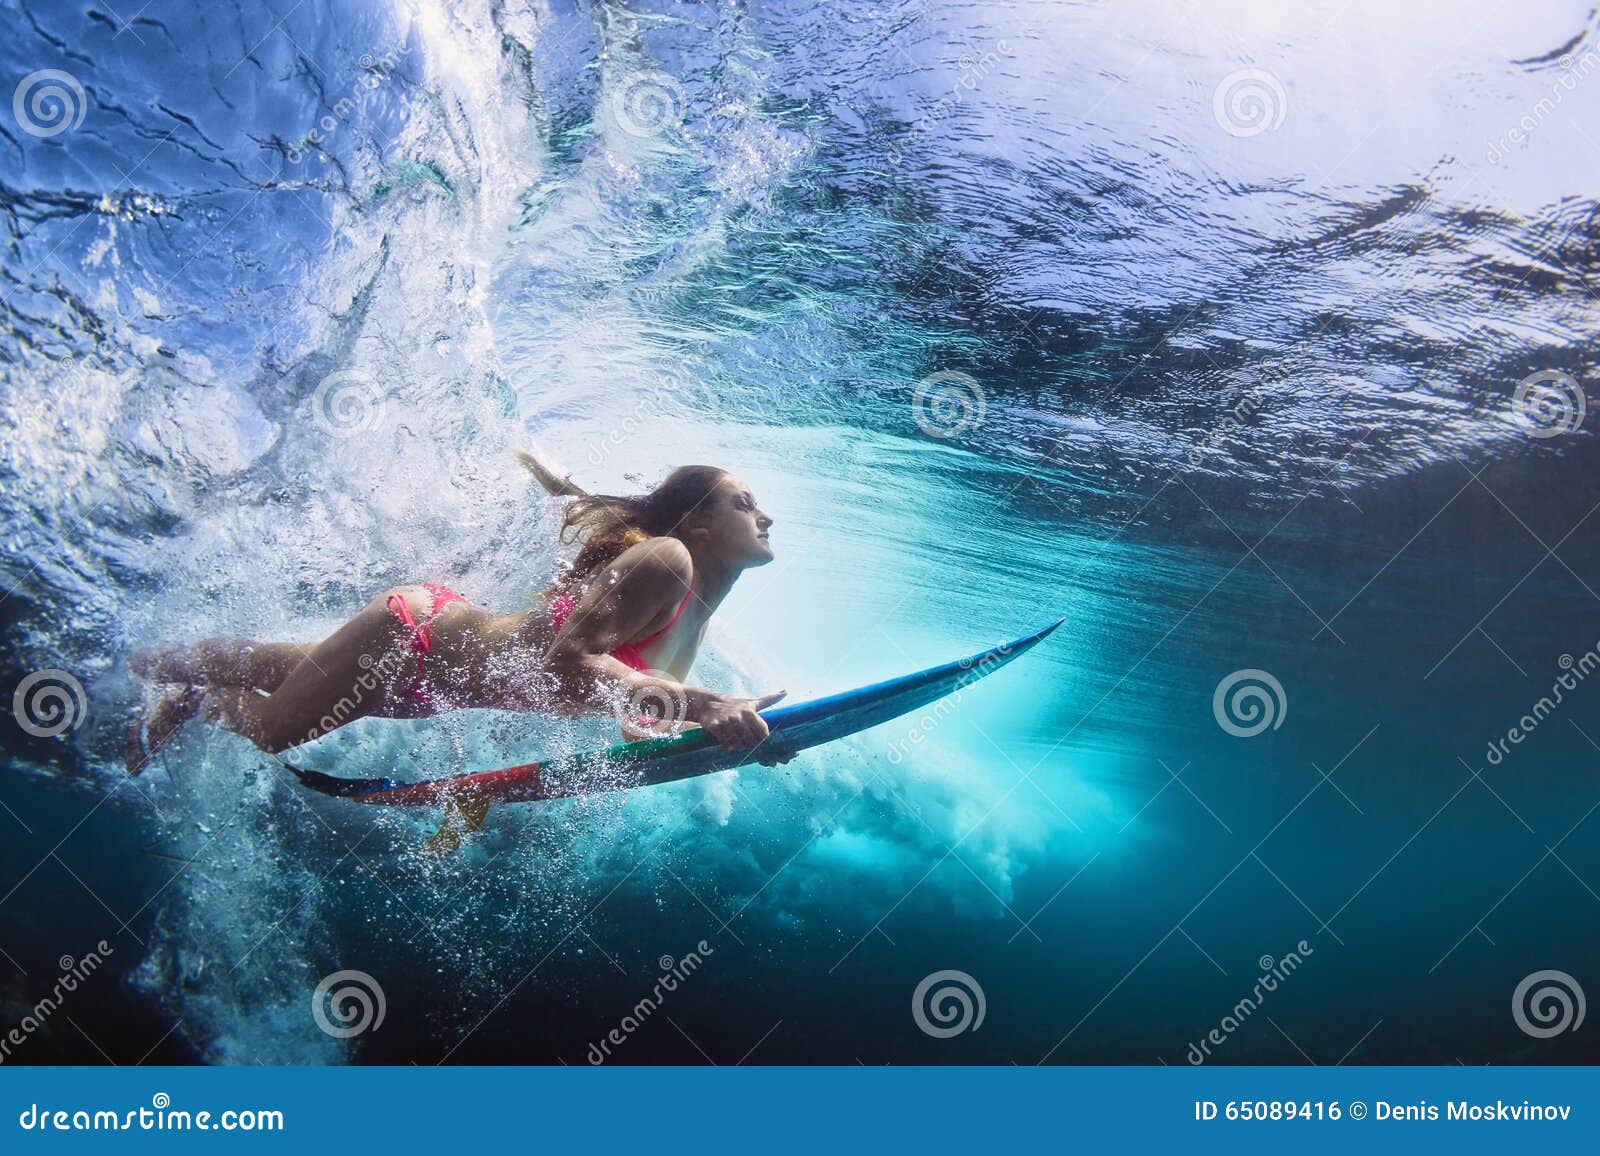 underwater photo of girl with board dive under ocean wave